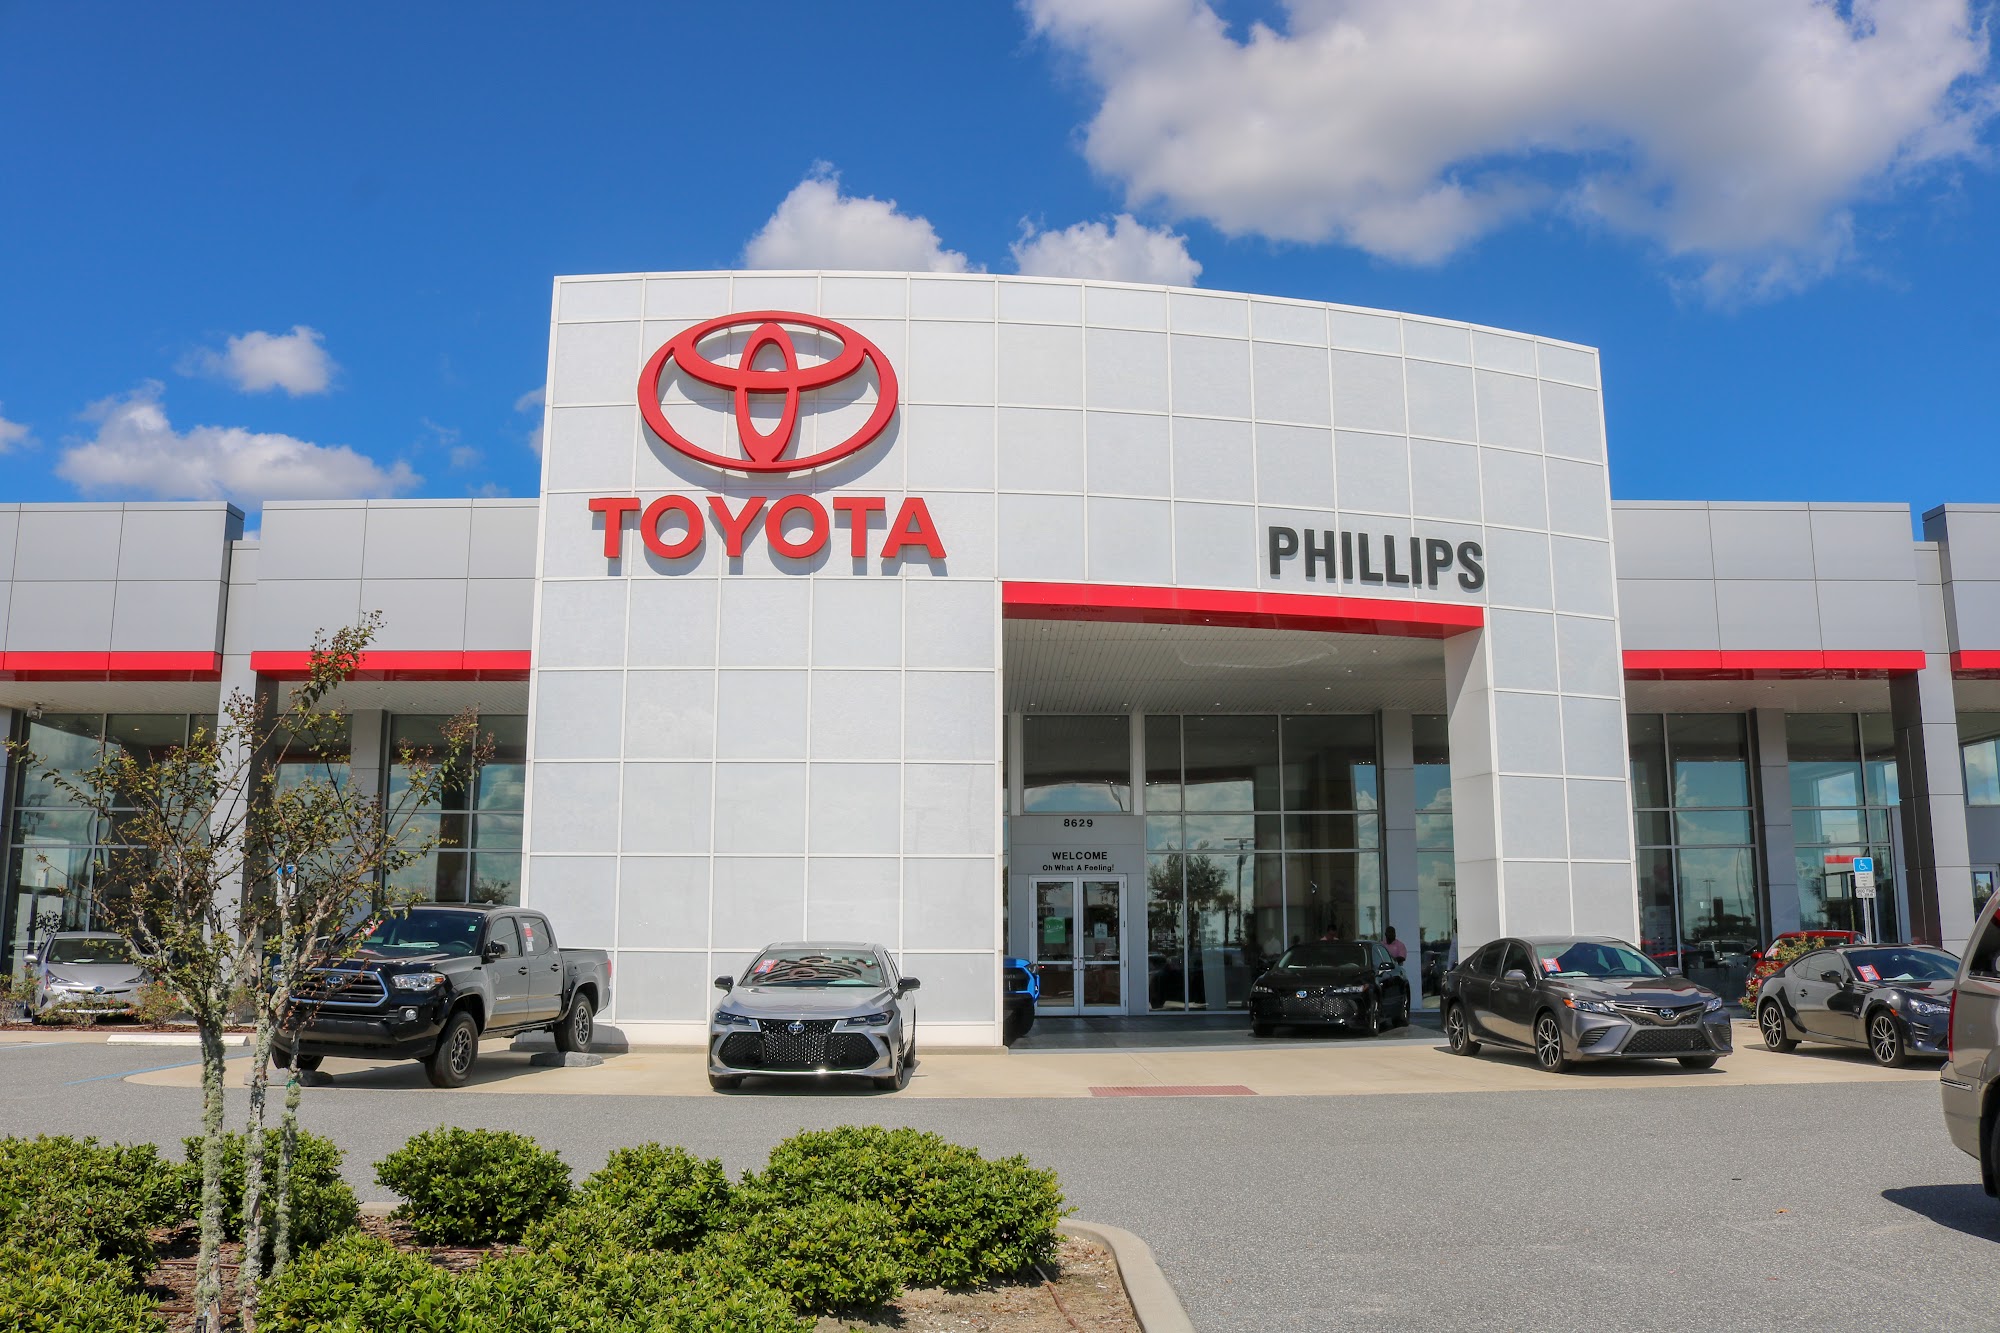 Phillips Toyota